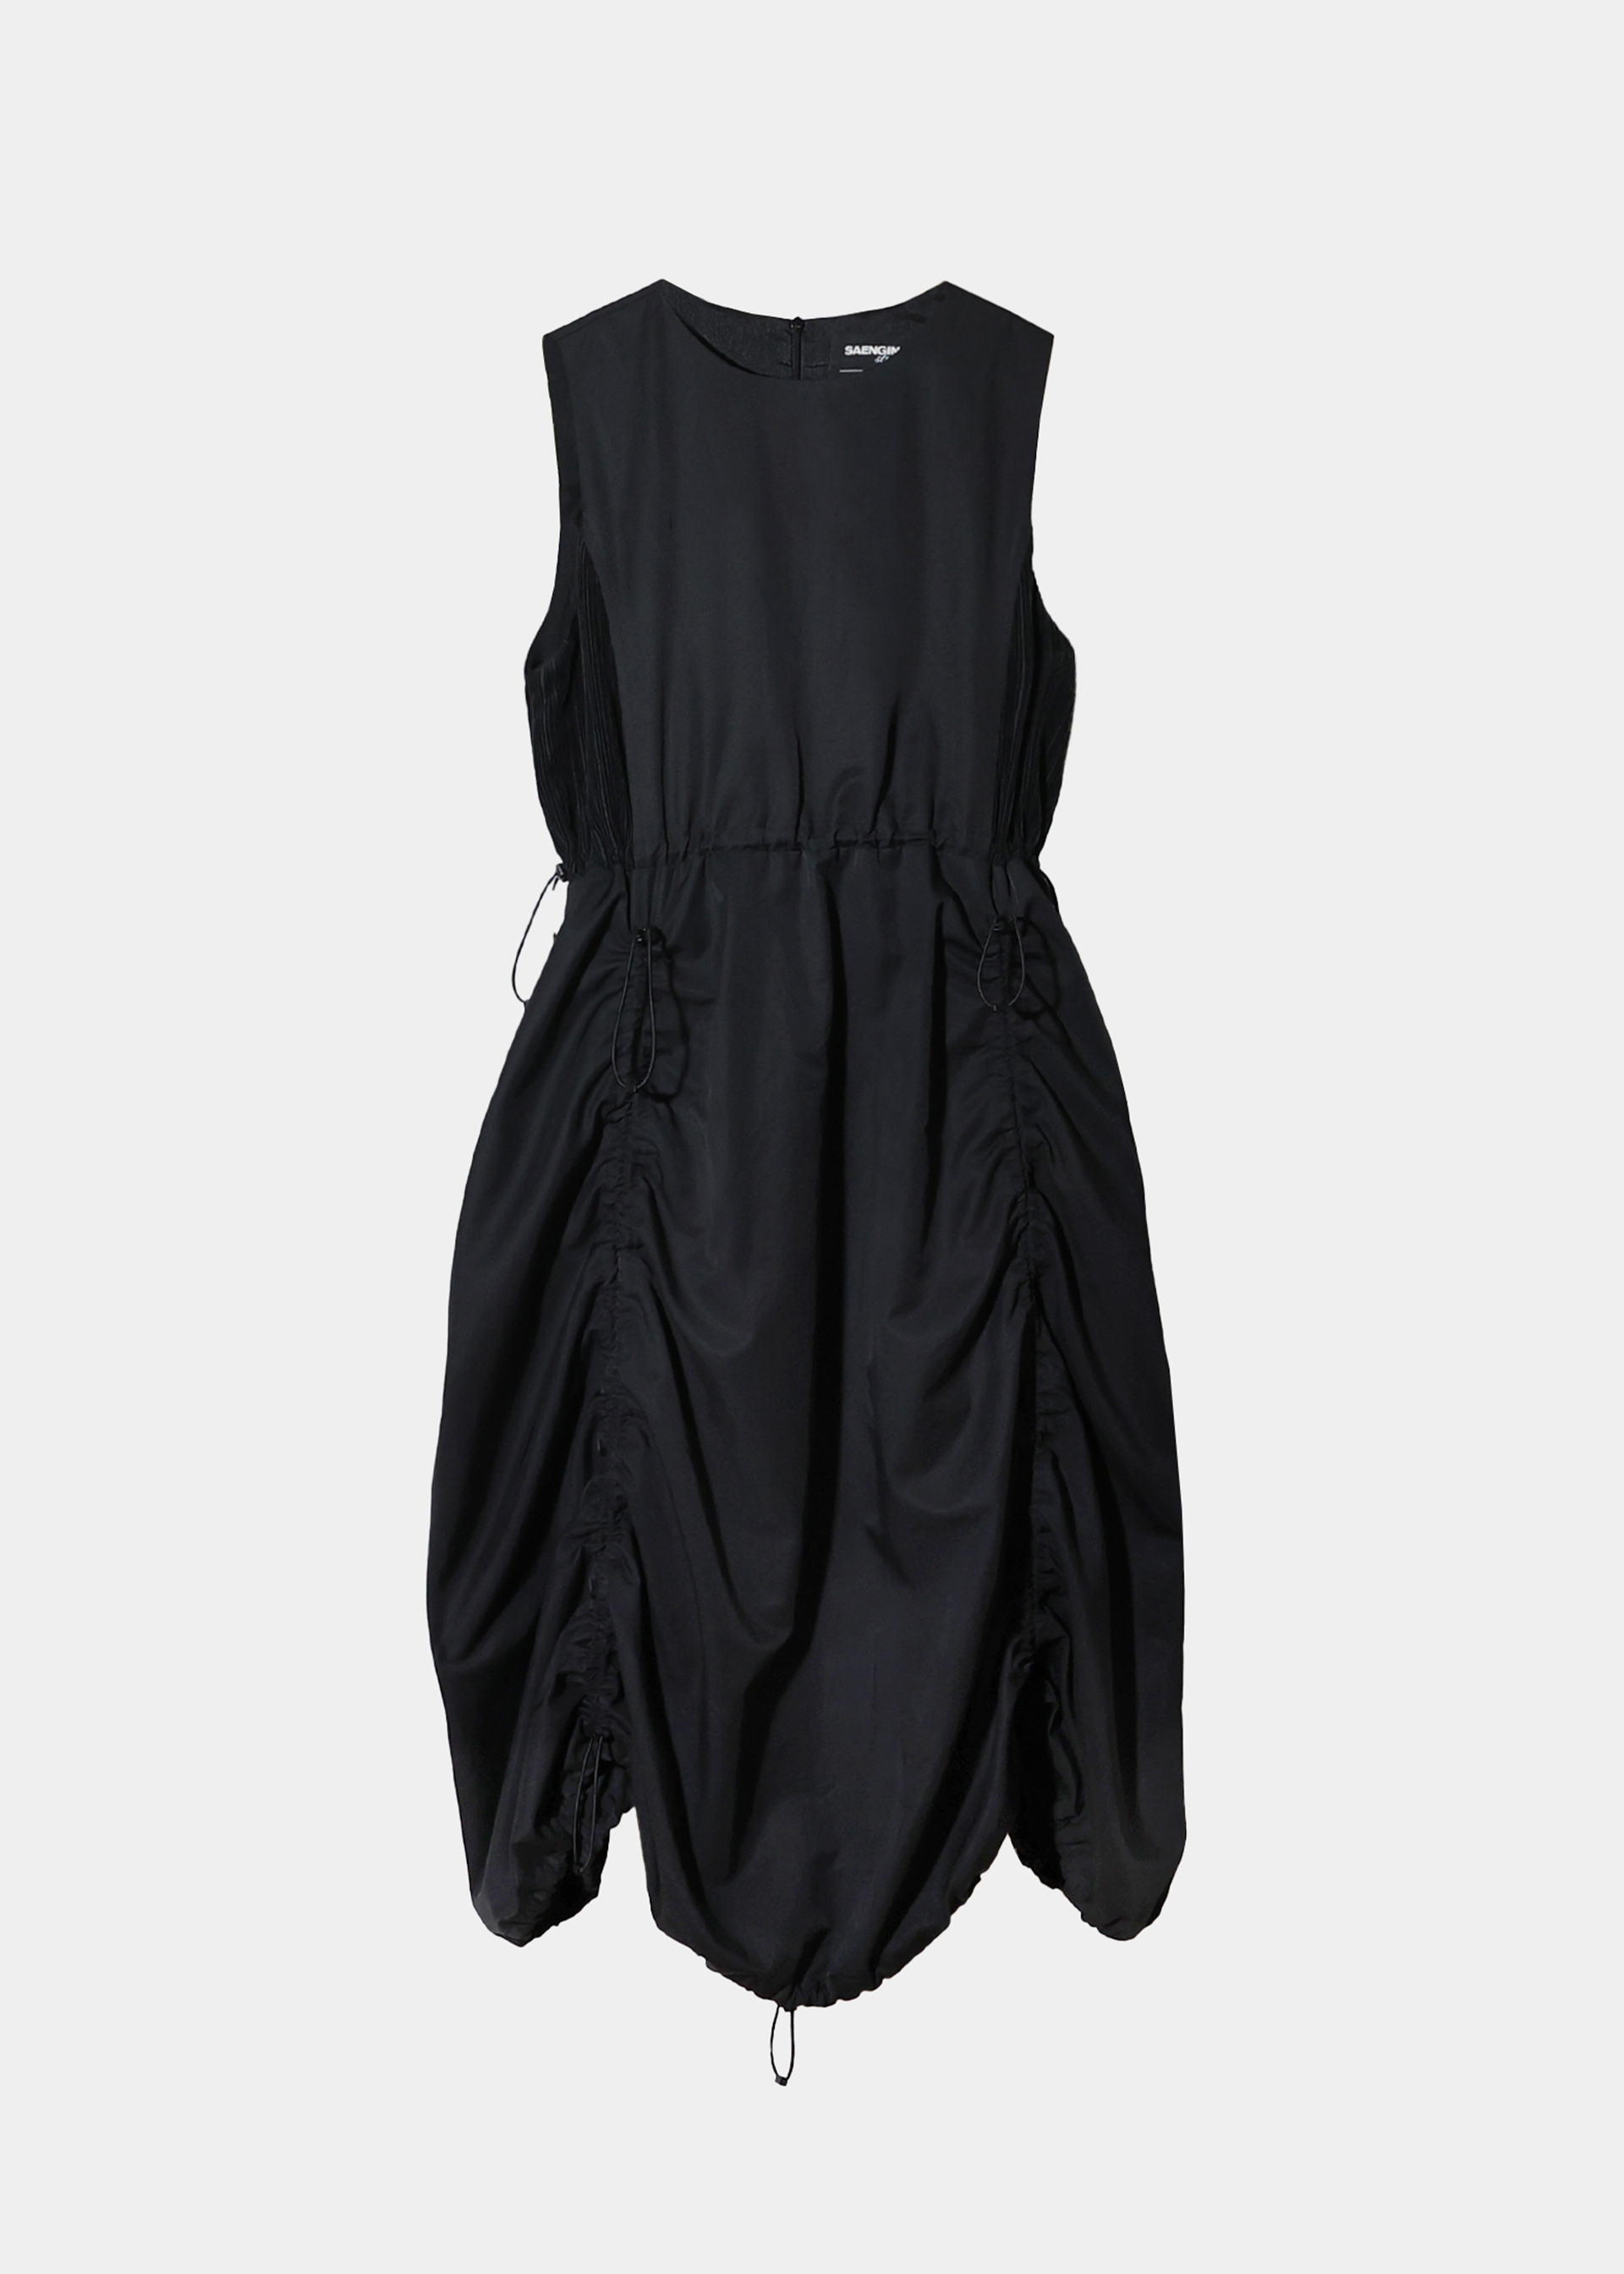 NYLON SHIRRING DRESS - BLACK